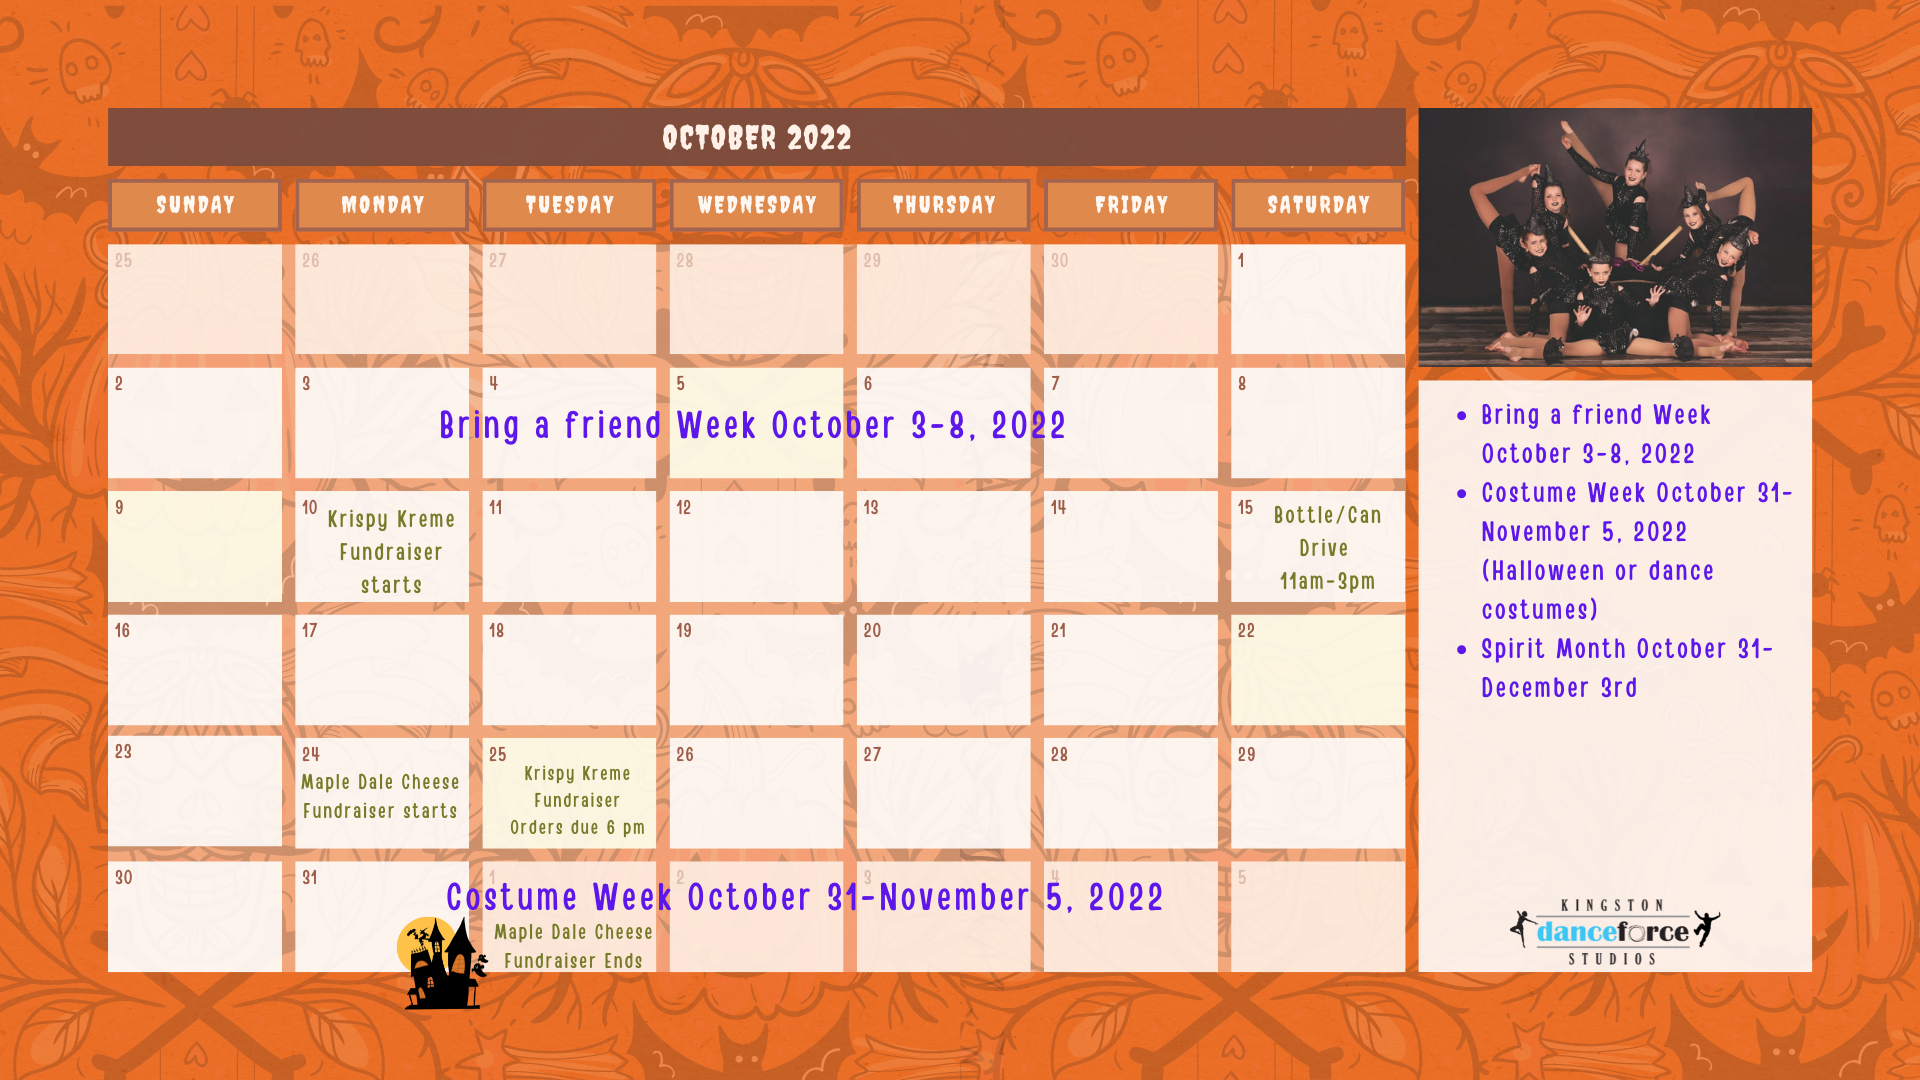 KDF At a glance calendar October 2022